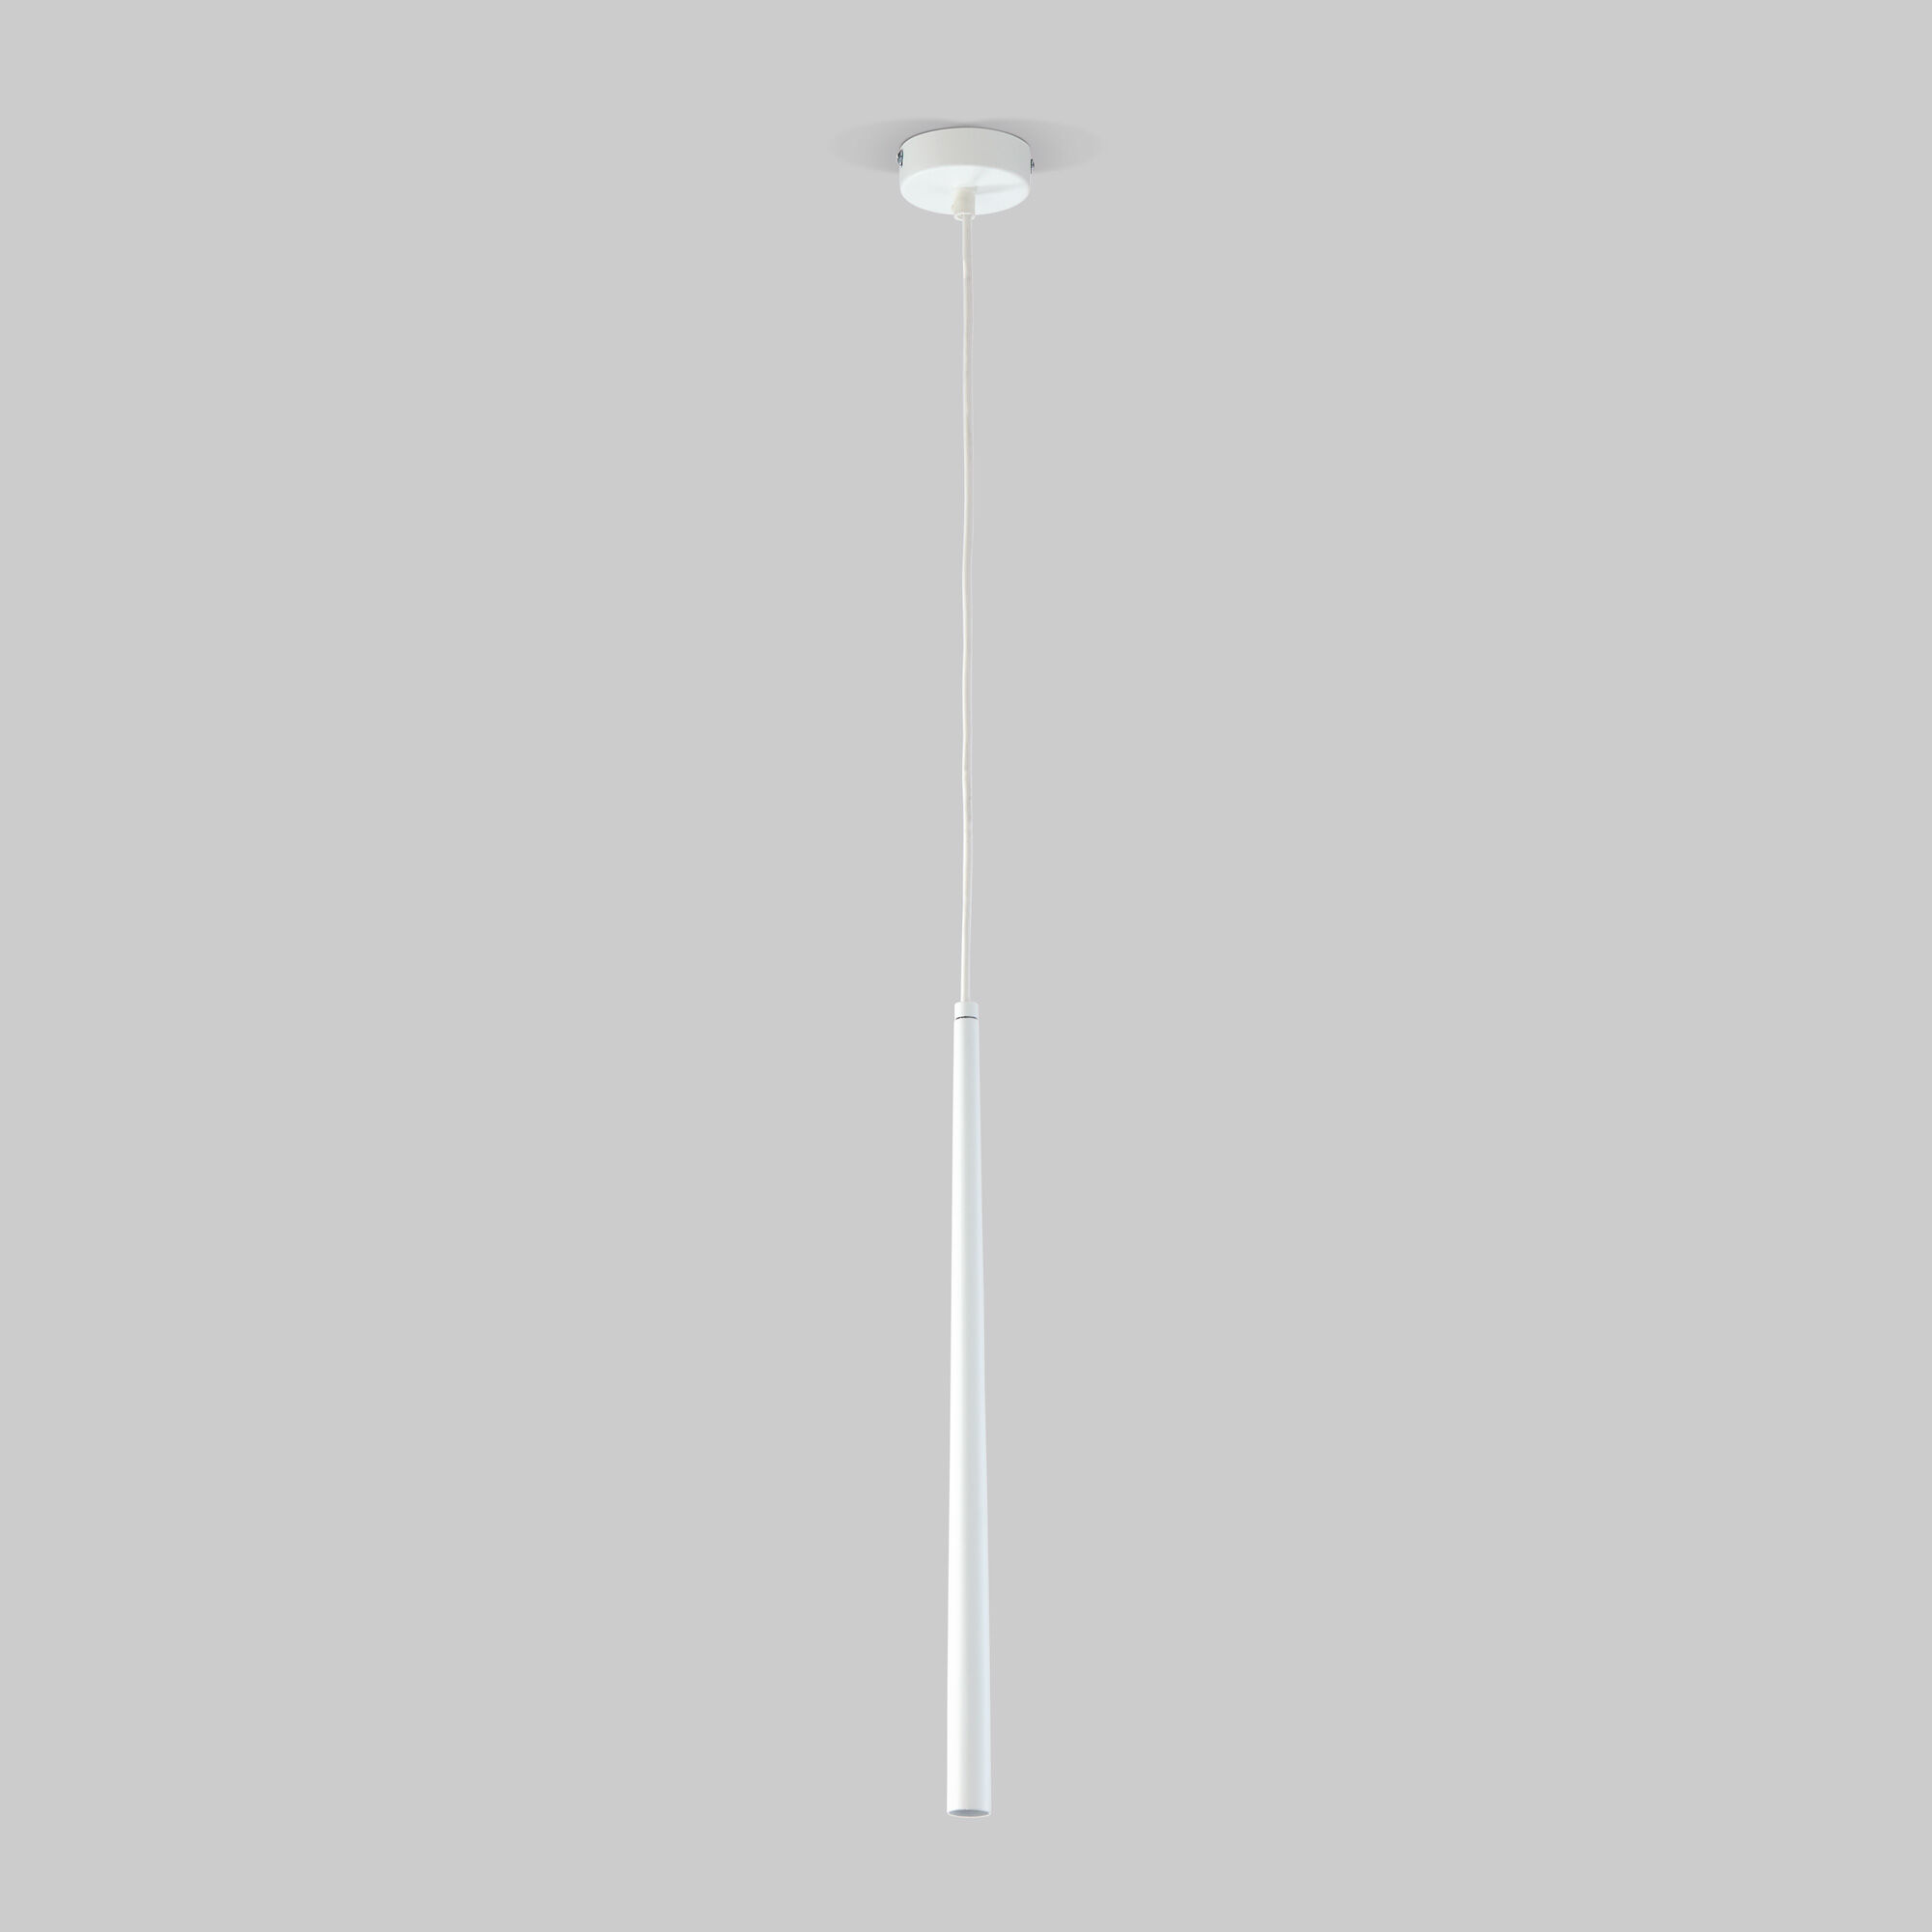 Подвесной светильник в стиле лофт TK Lighting Piano 6425 Piano White. Фото 1